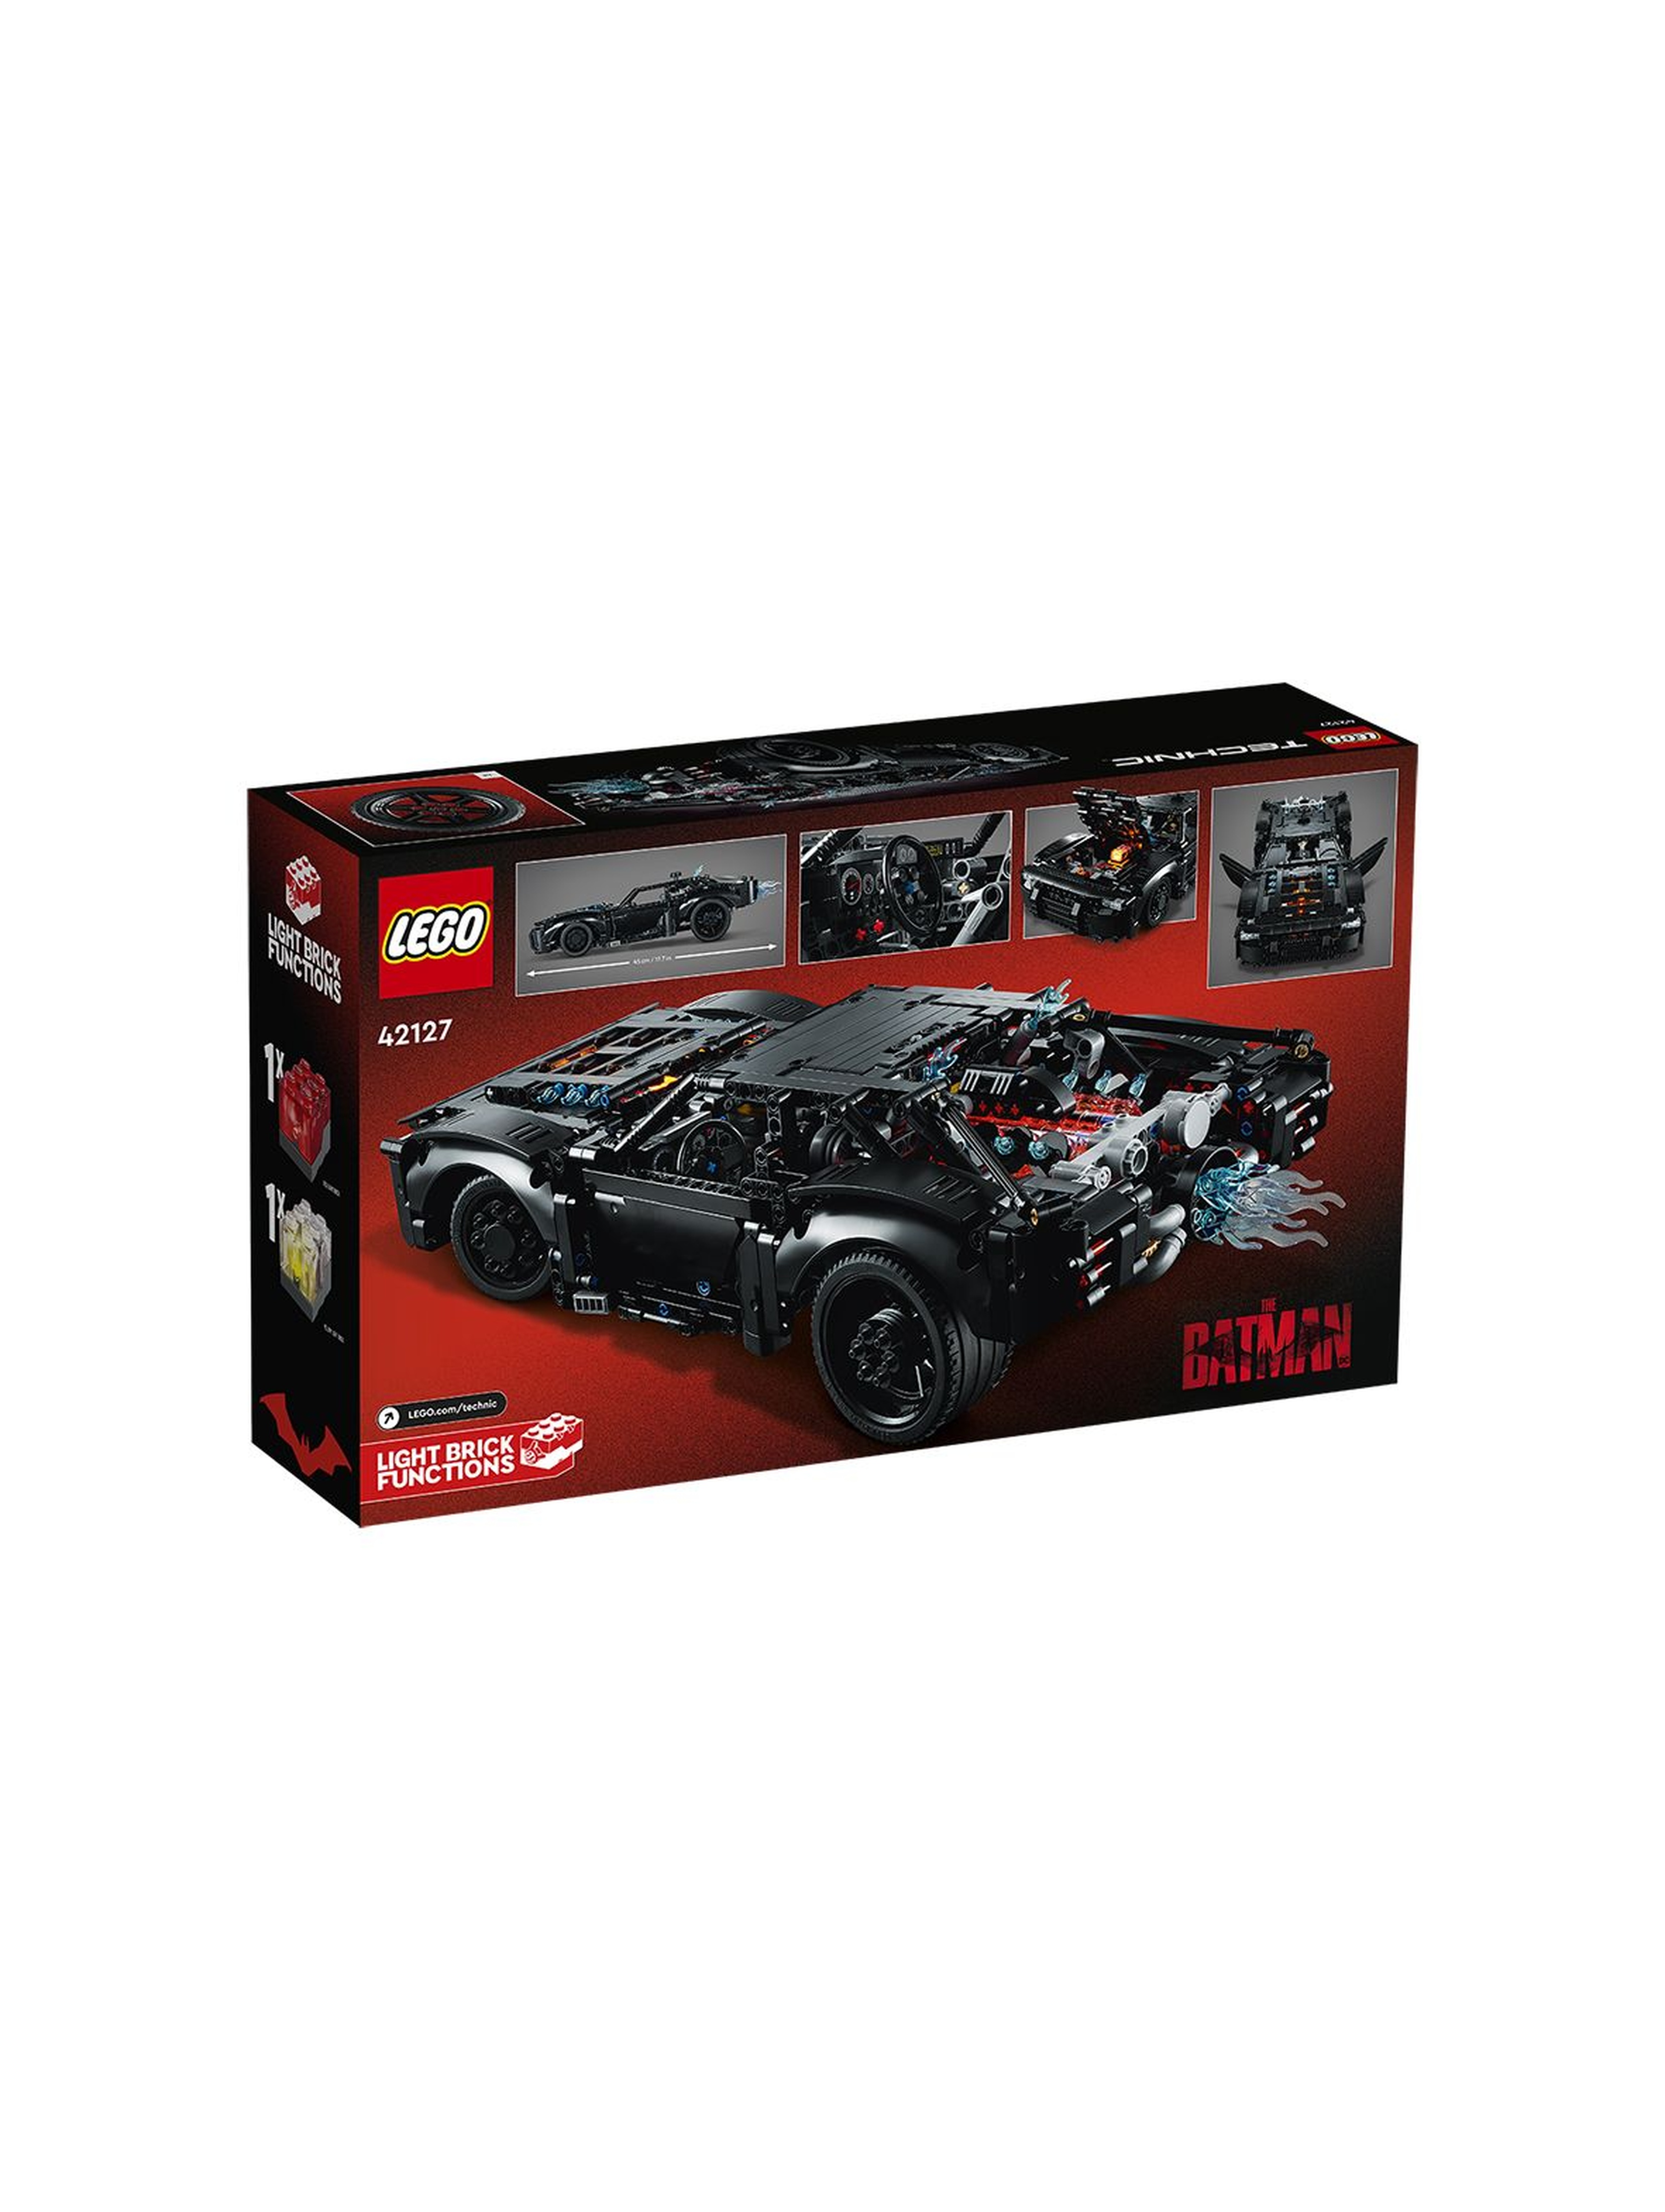 LEGO® Technic BATMAN — BATMOBIL 42127 wiek 10+